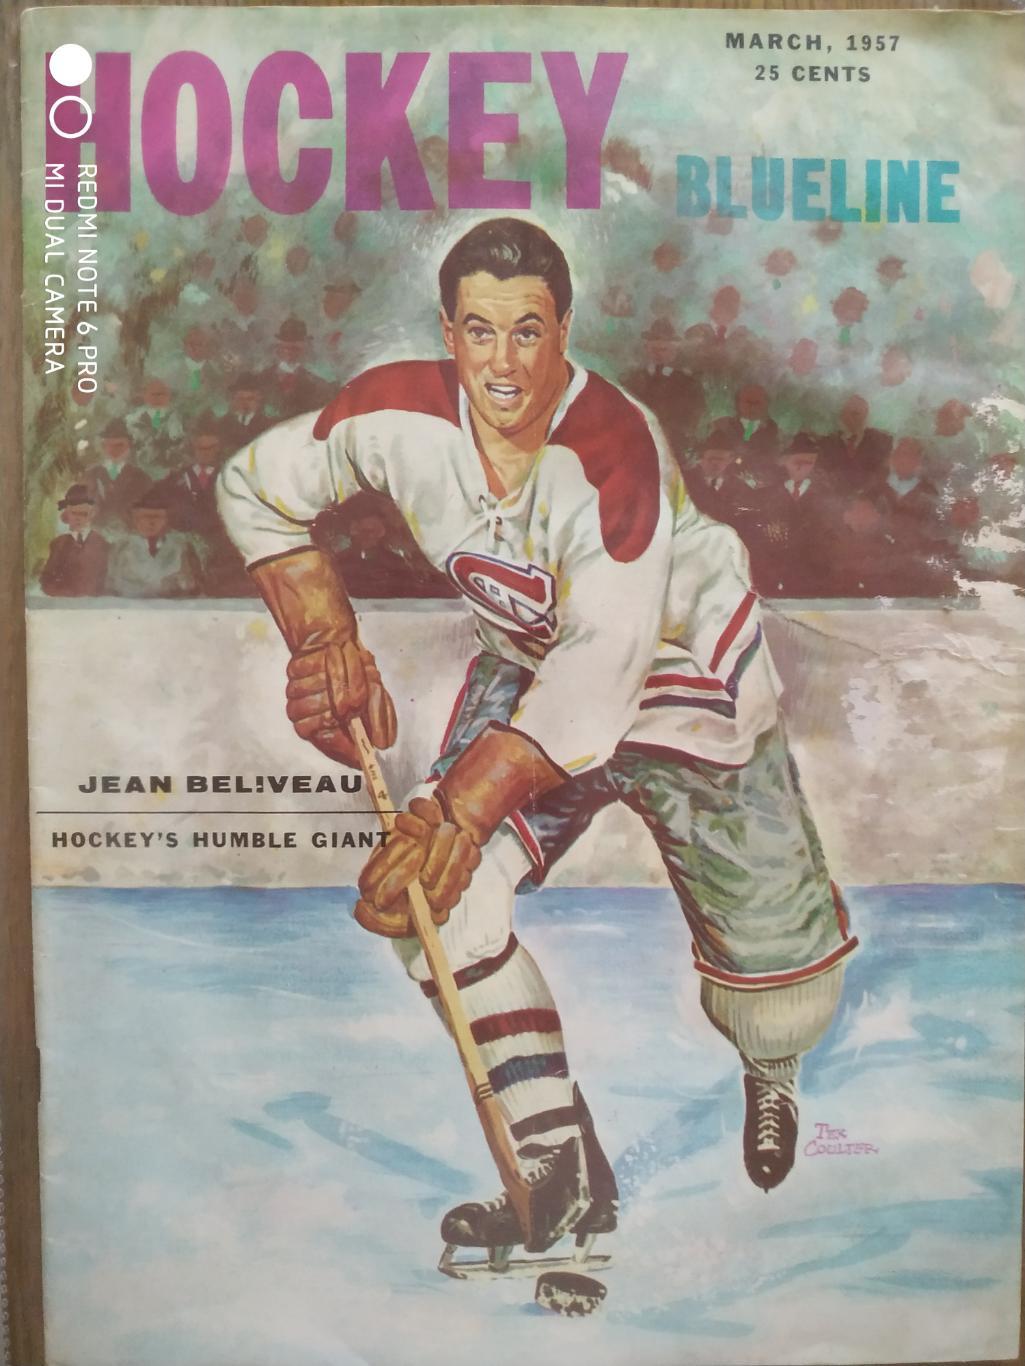 ЖУРНАЛ ЕЖЕМЕСЯЧНИК НХЛ NHL 1957 MARCH THE HOCKEY MONTHLY BLUELINE